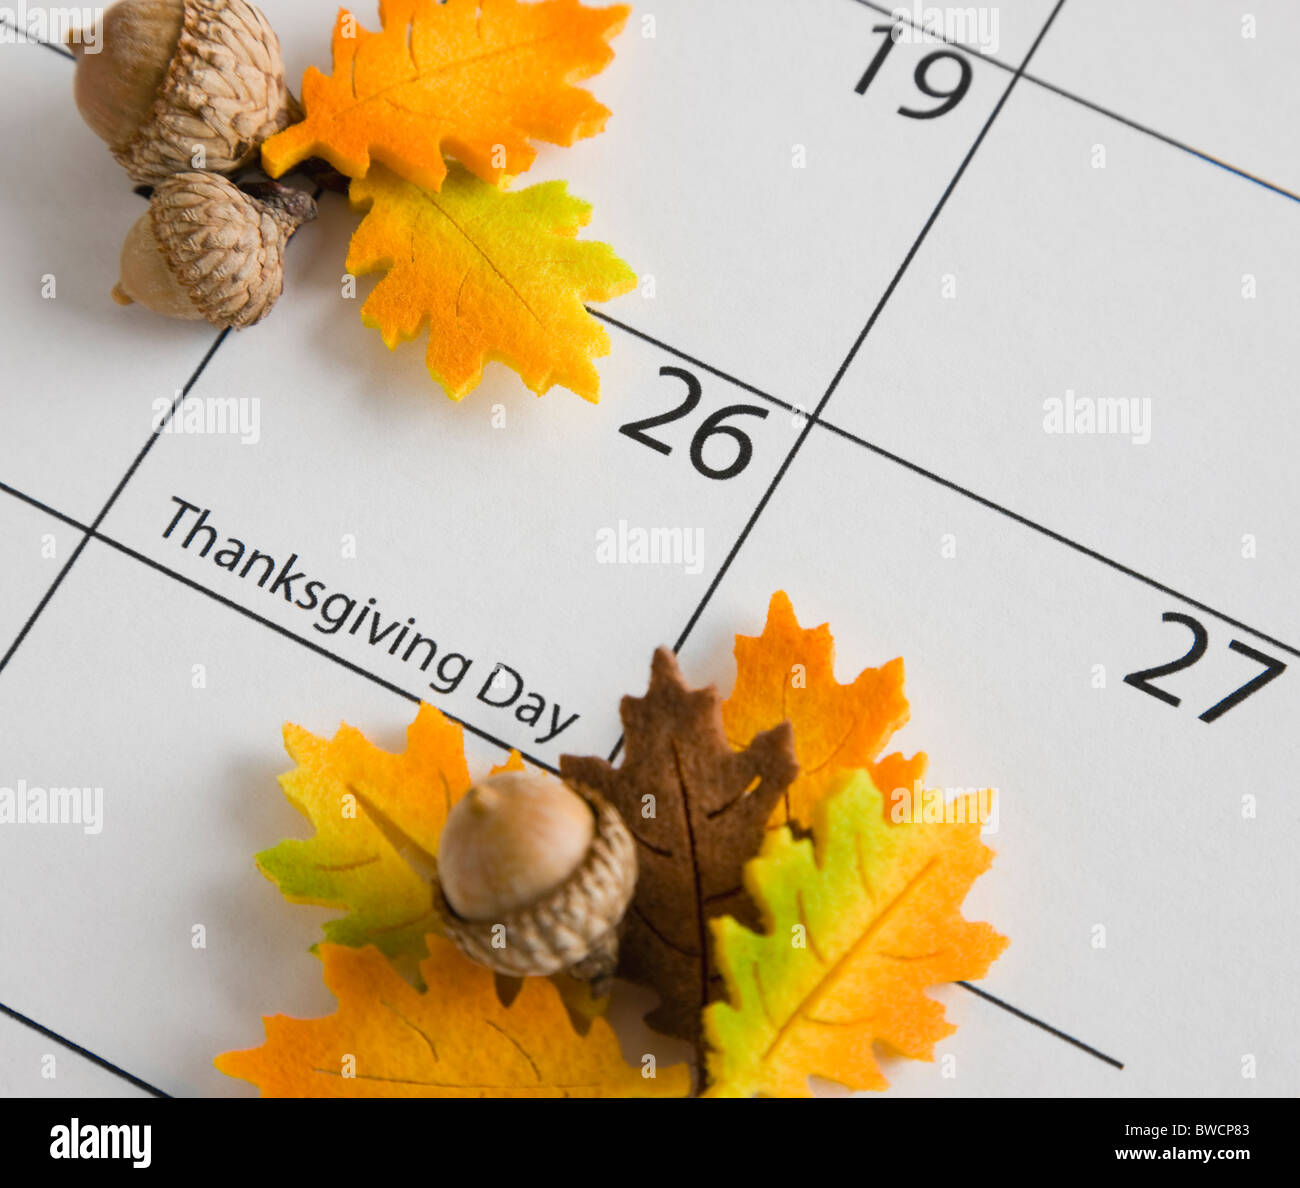 USA, Illinois, Metamora, Acorns on calendar Stock Photo